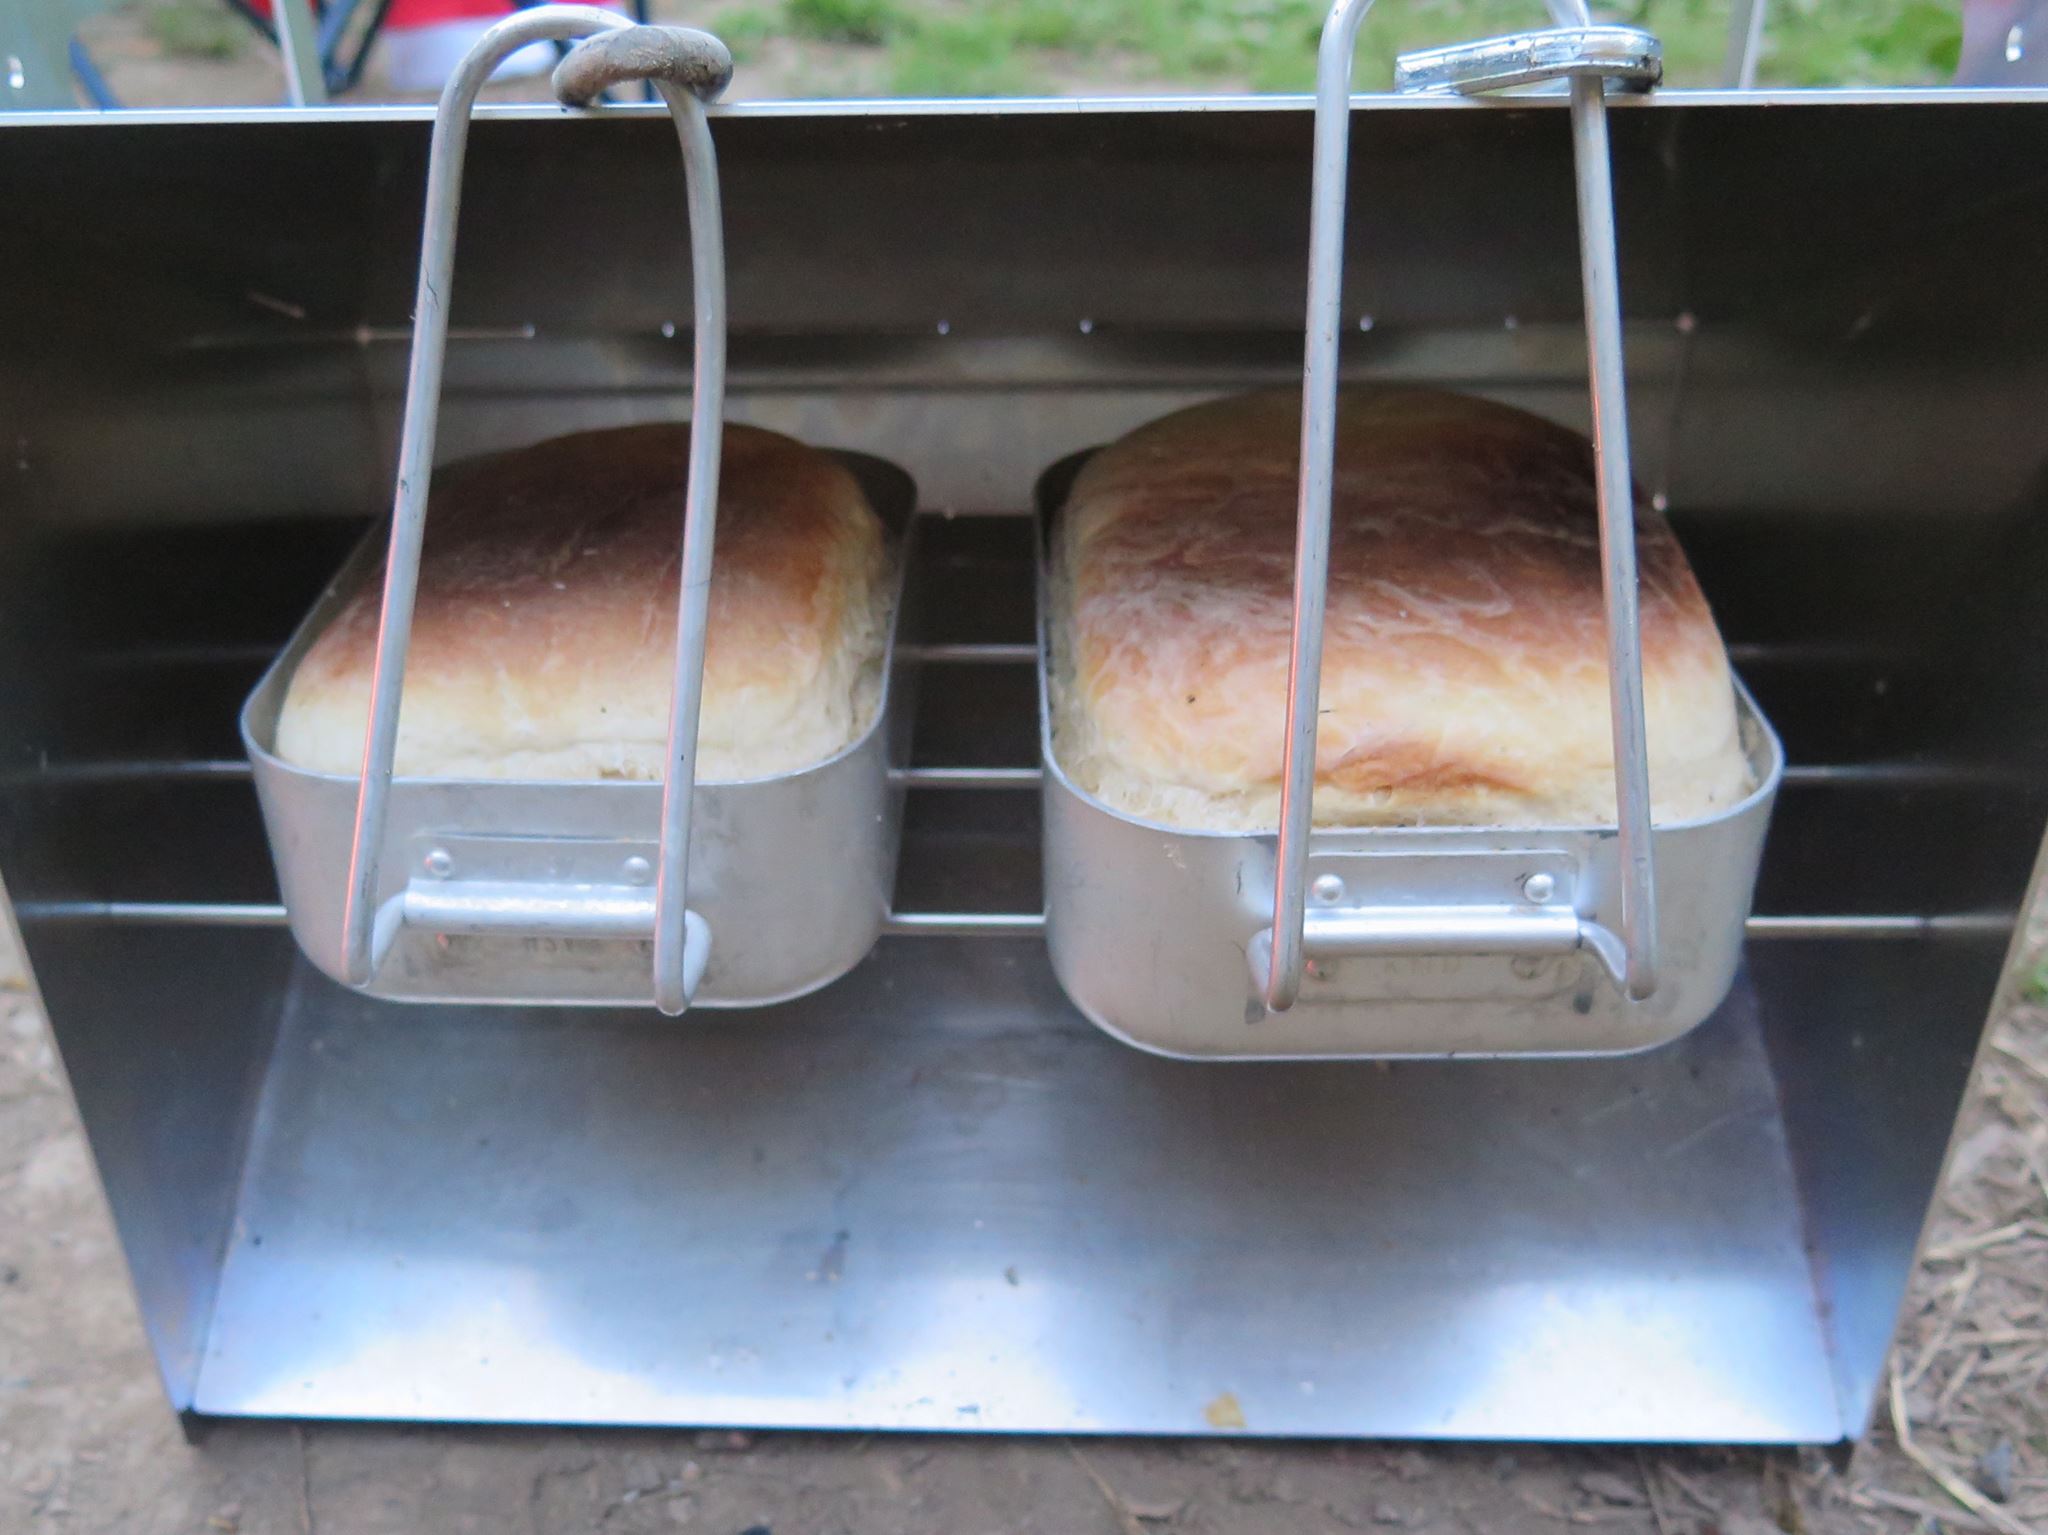 Ferran reflector ovens, breadtest